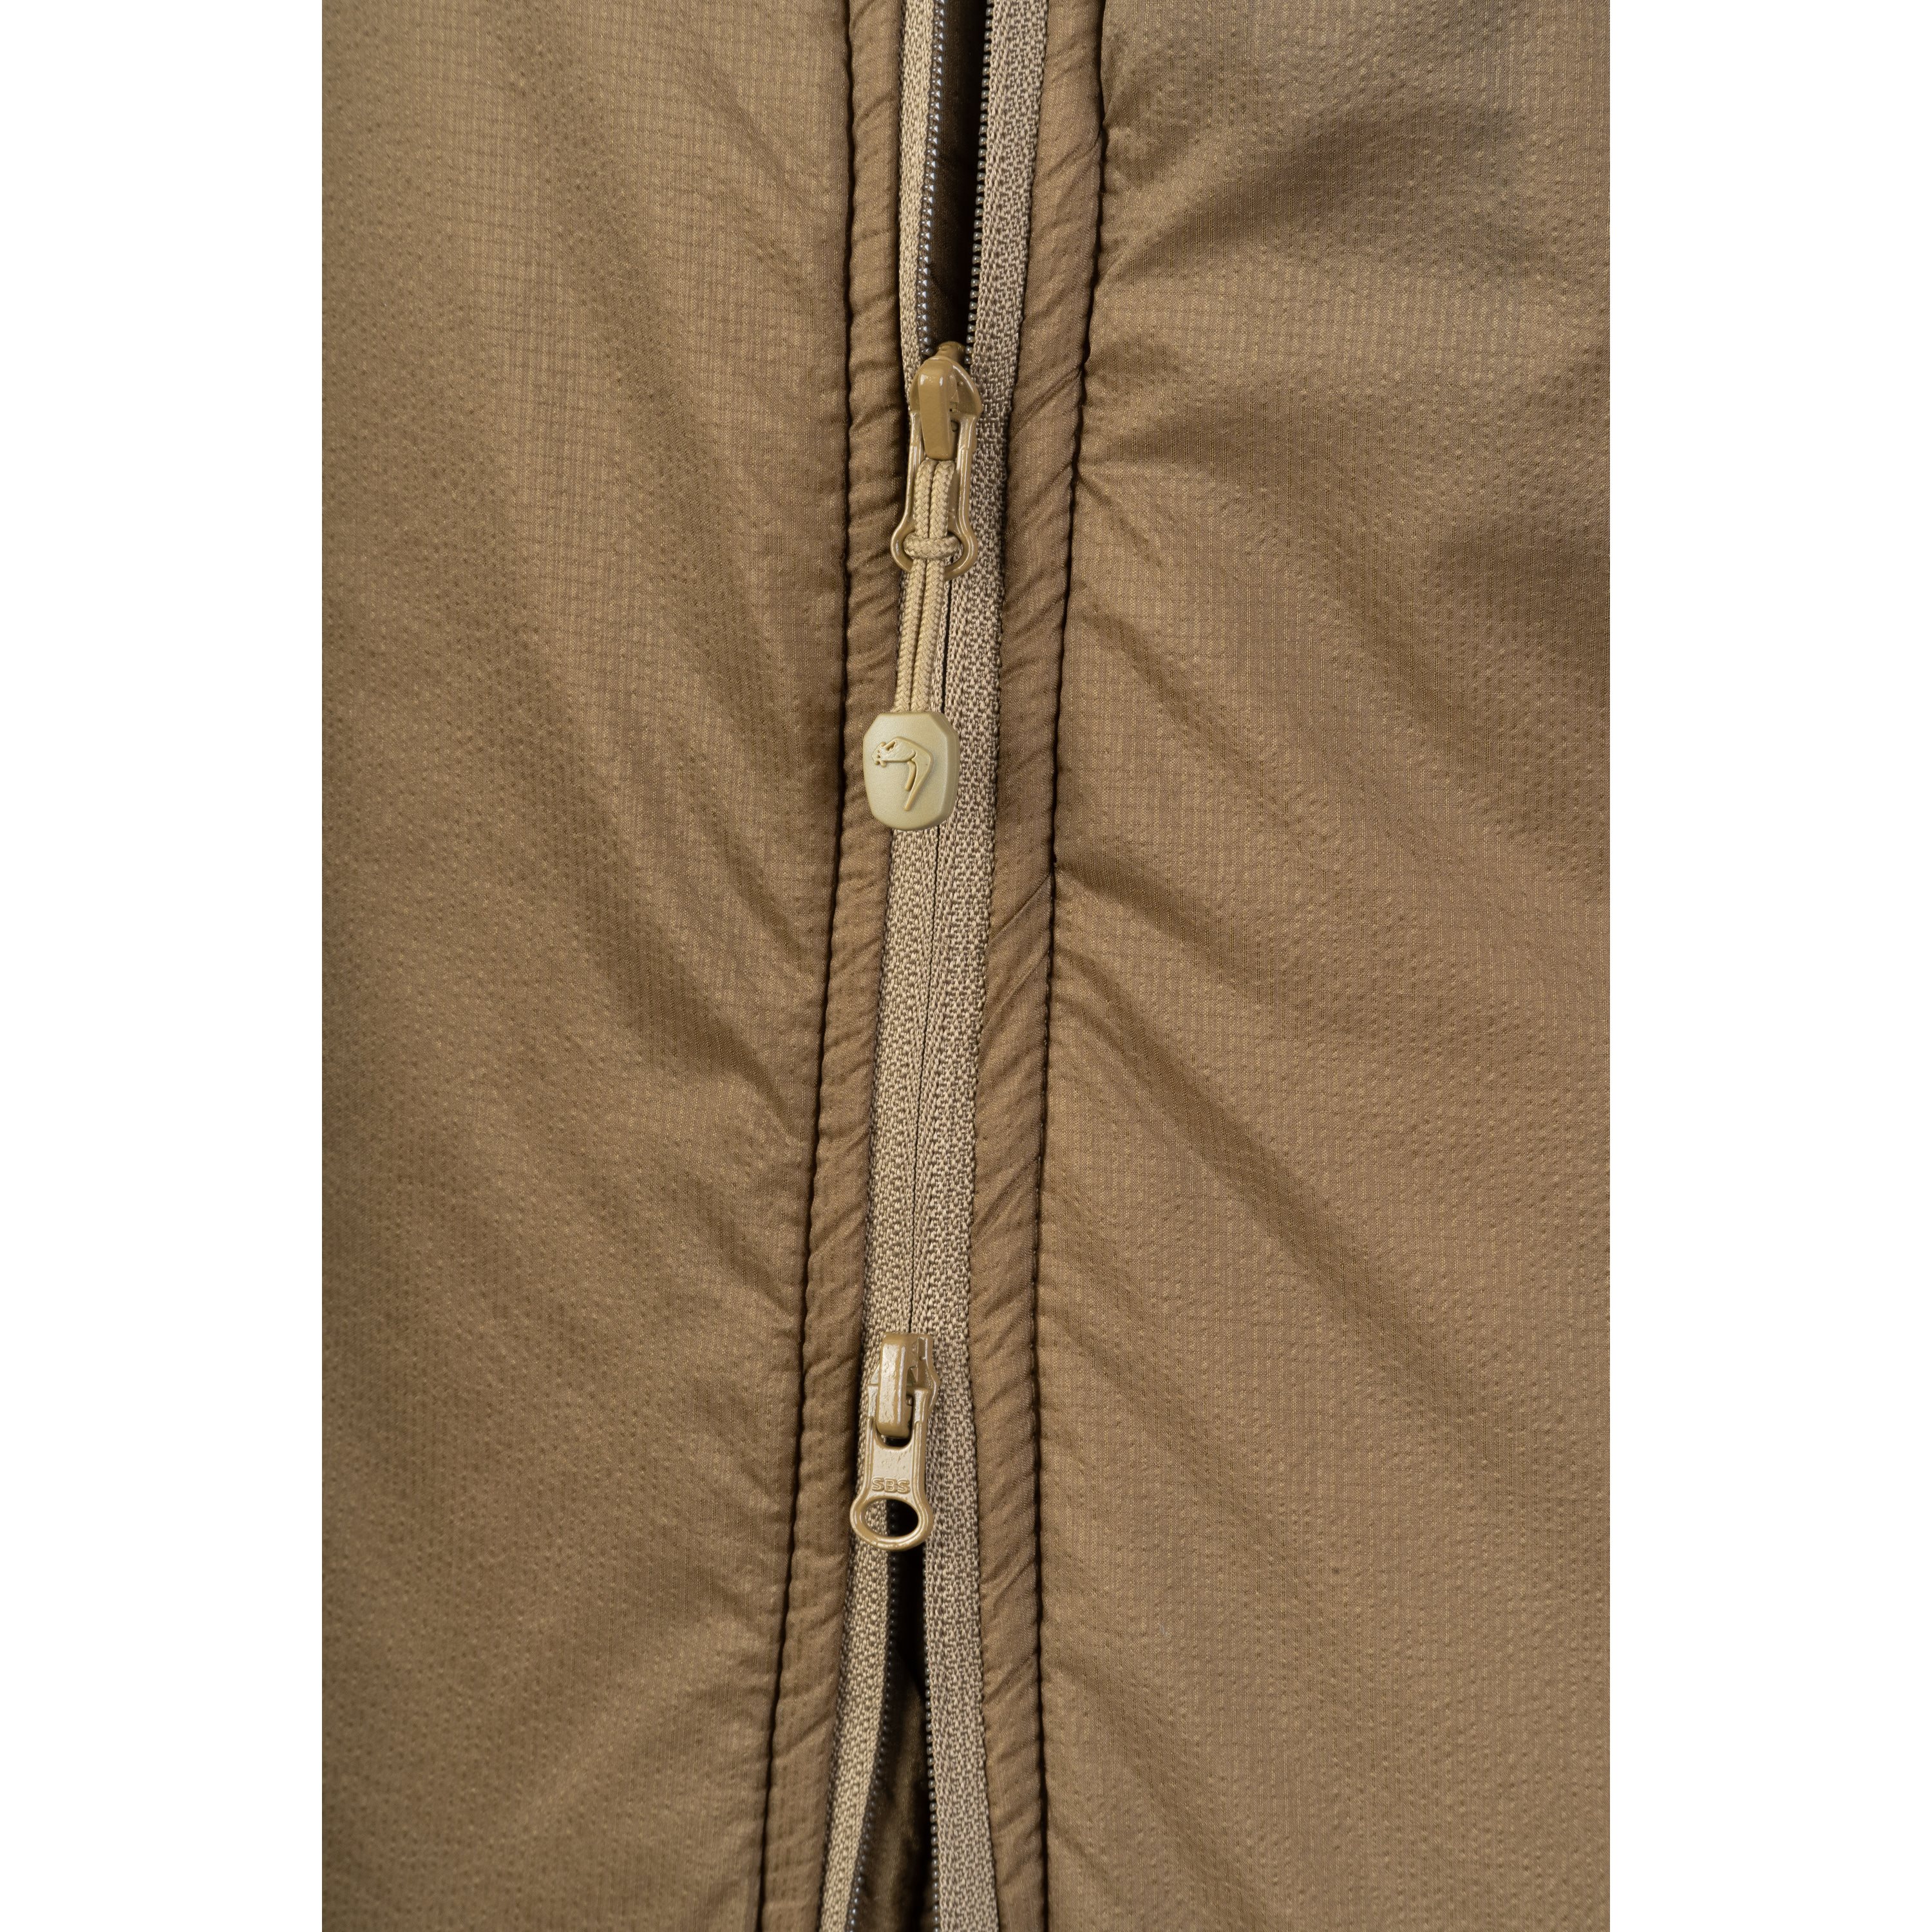 FRONTIER Jacket DARK COYOTE Viper® VJKTFRODCOY L-11